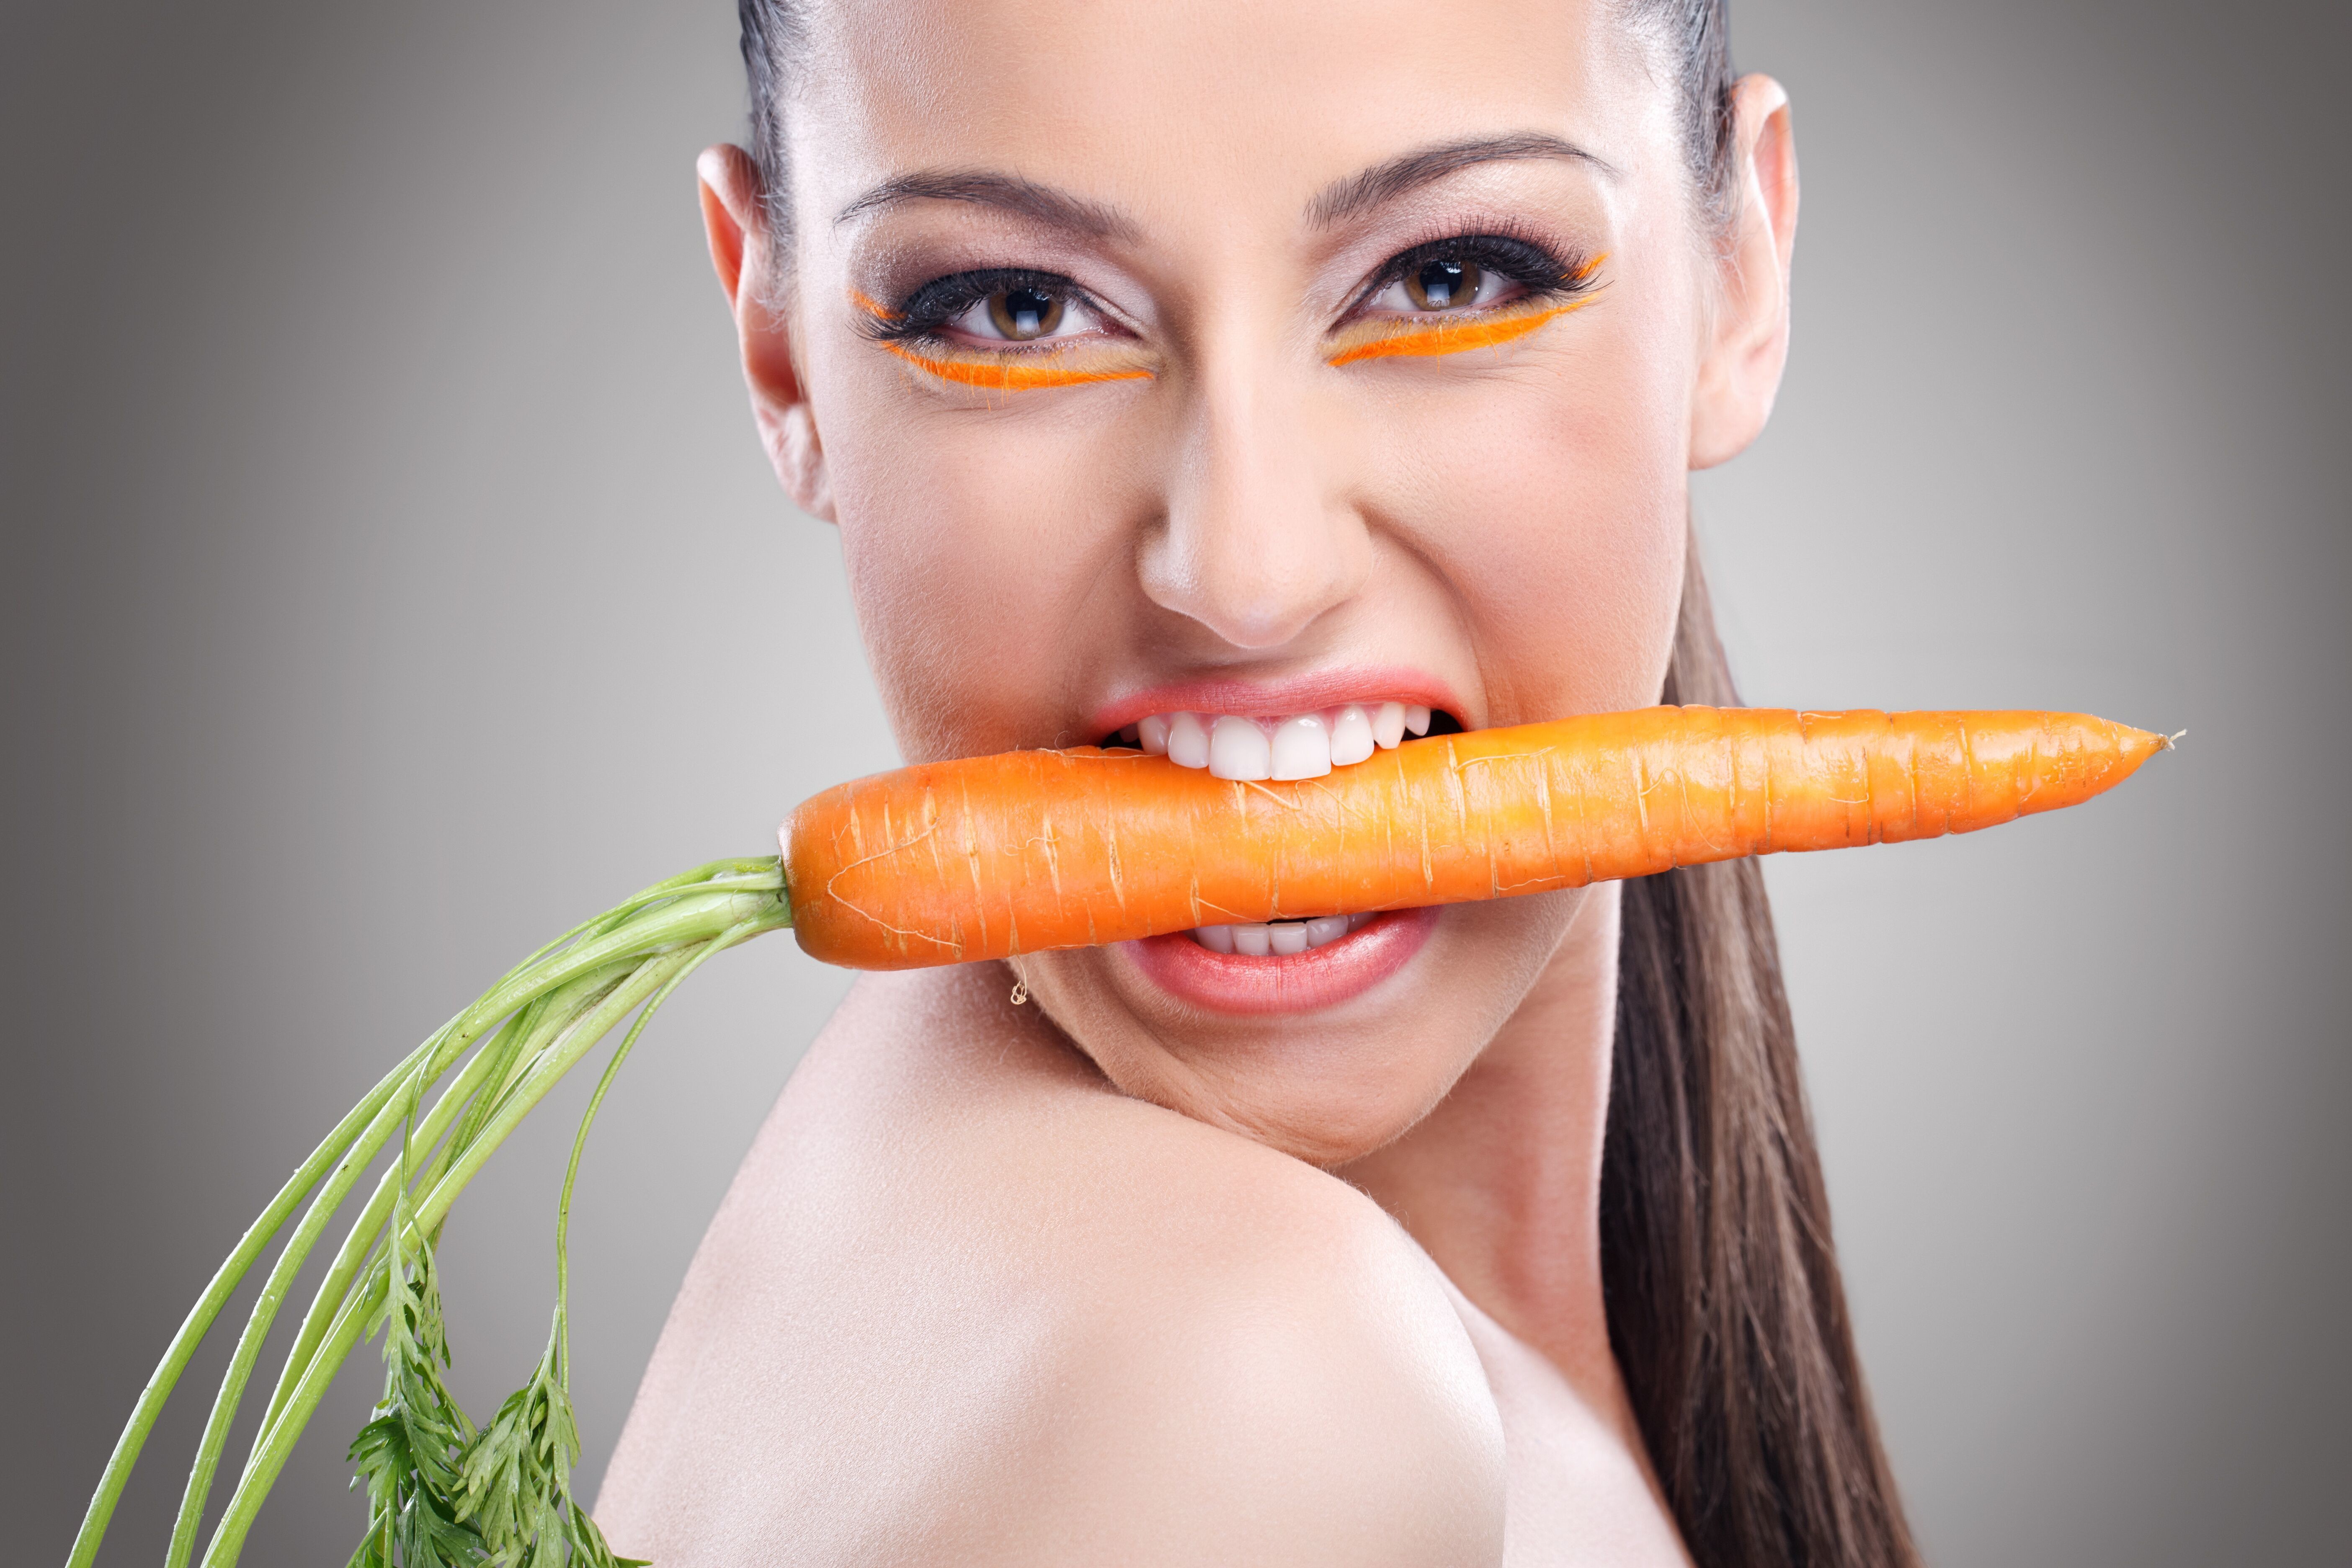 People 5616x3744 carrots women face model biting food vegetables gray background open mouth closeup women indoors indoors studio